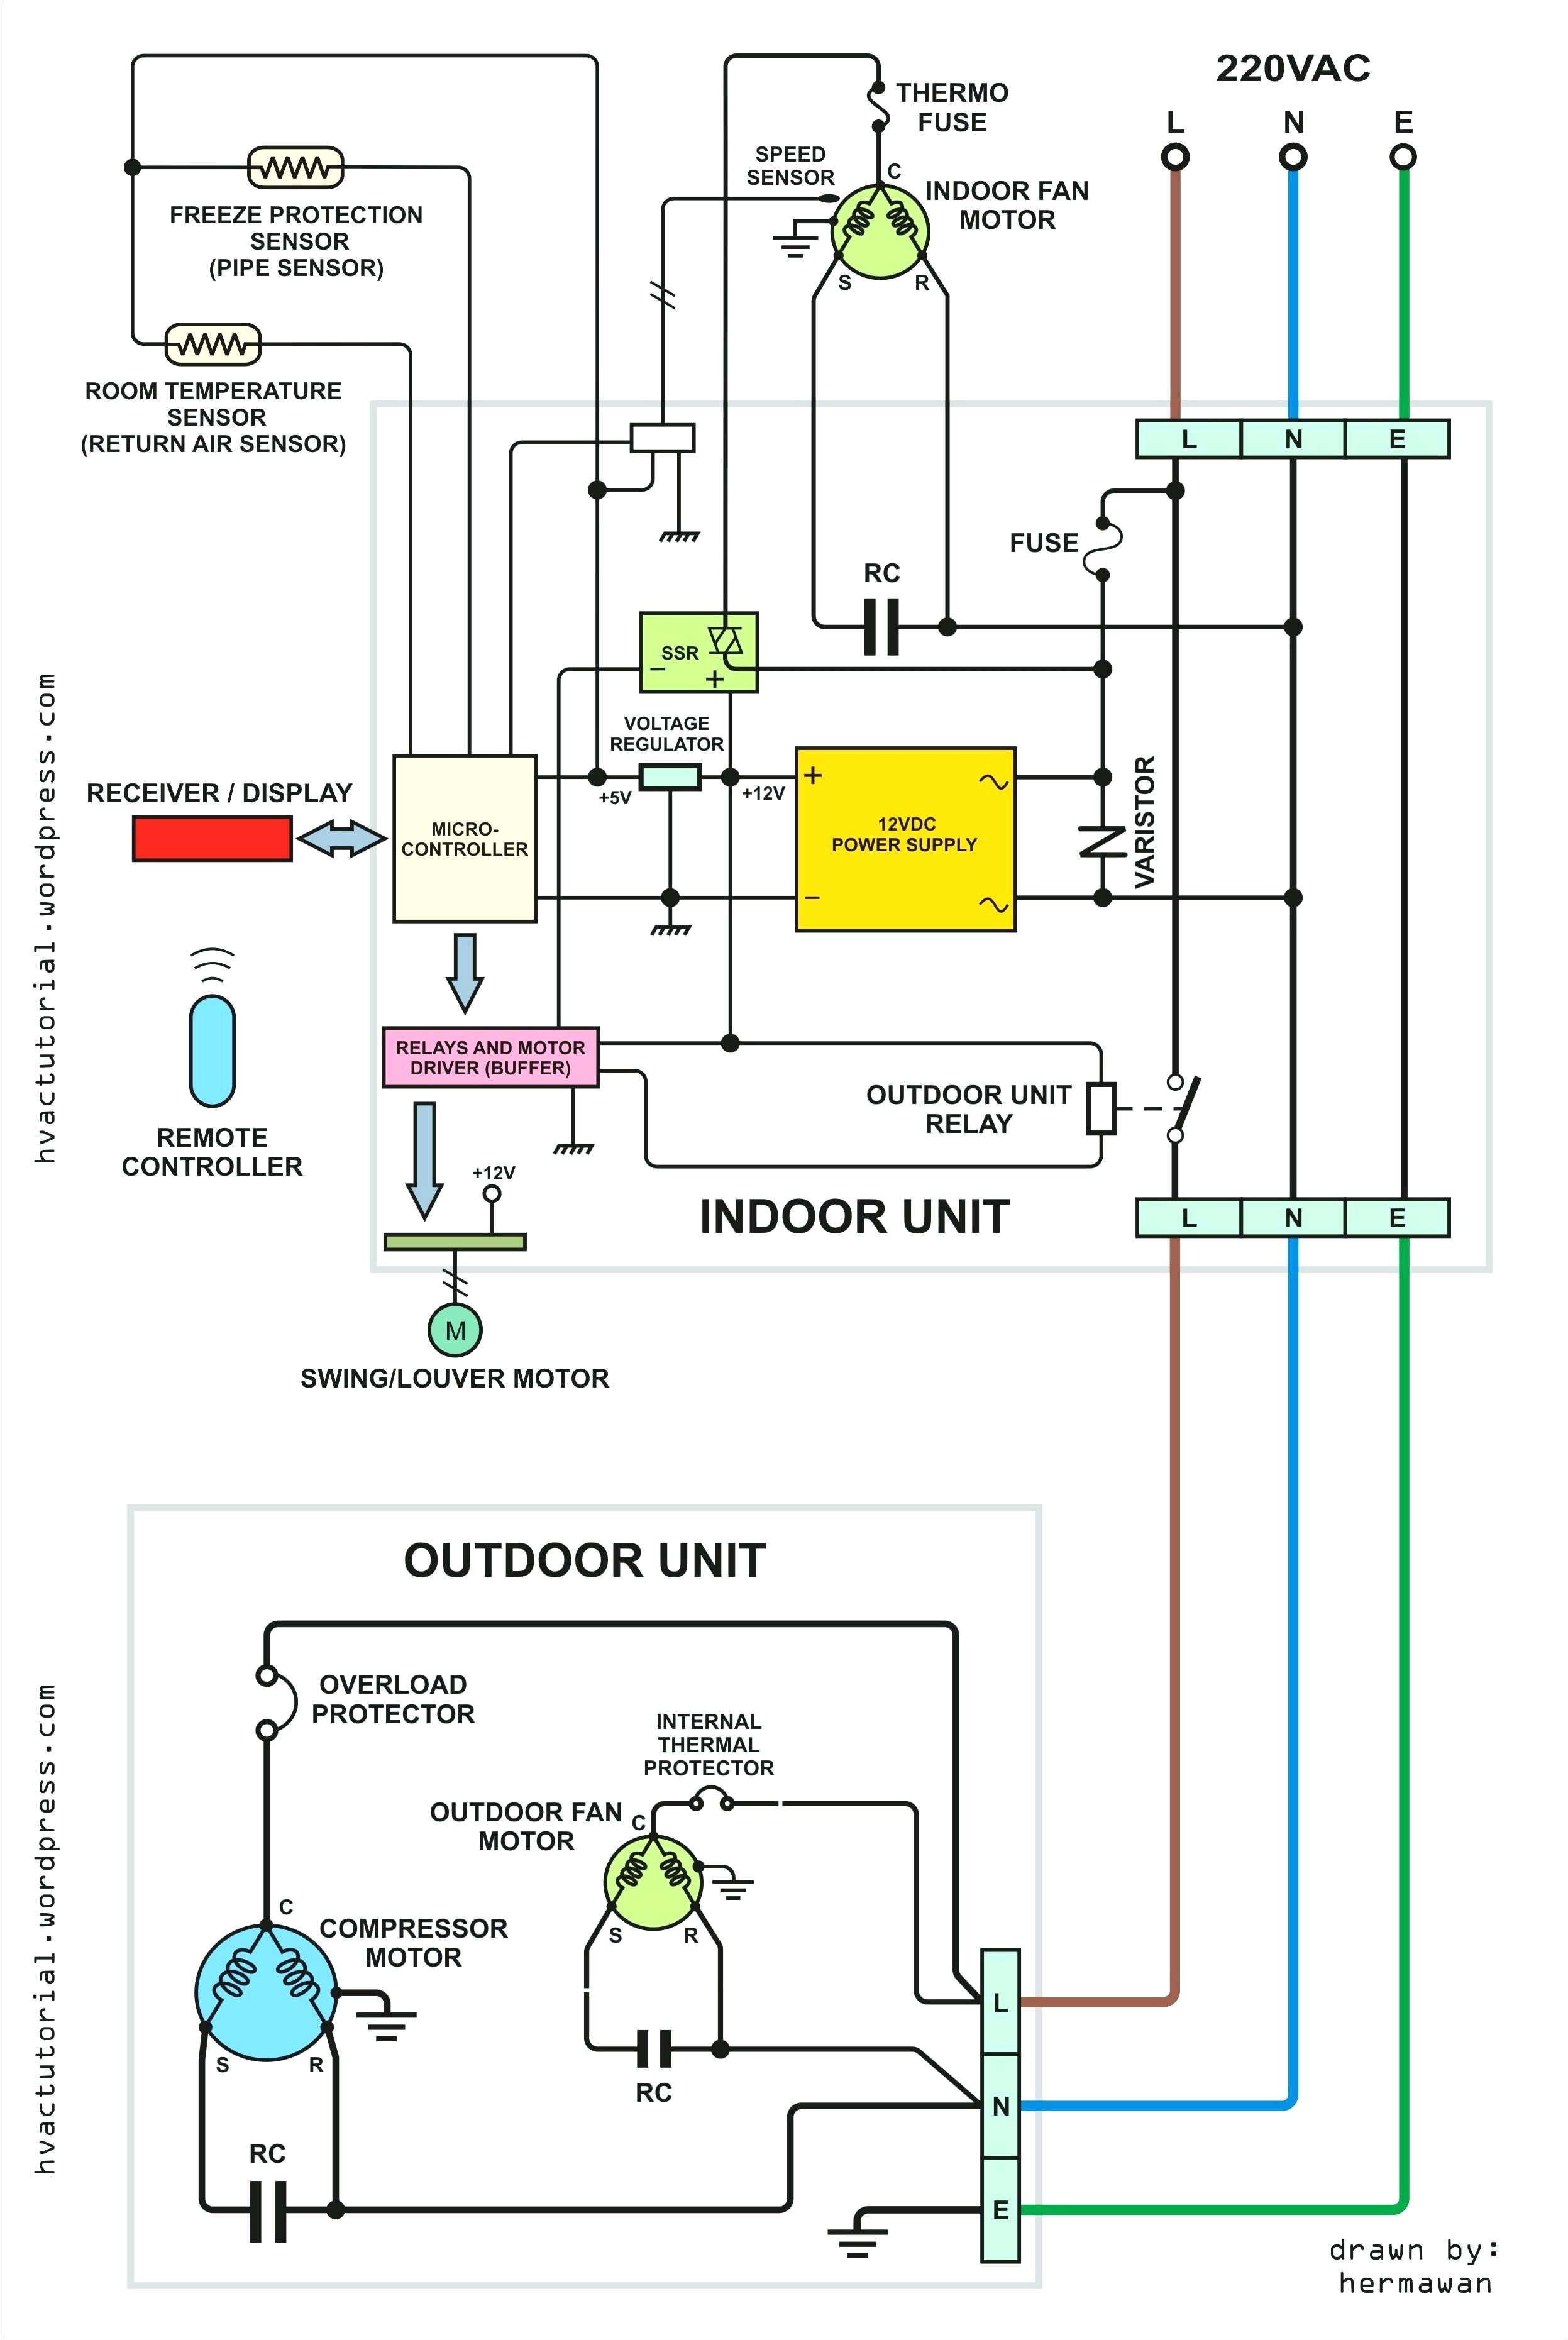 hvac electrical wiring colors wiring diagram paper electrical hvac wiring wiring diagrams konsult hvac electrical wiring